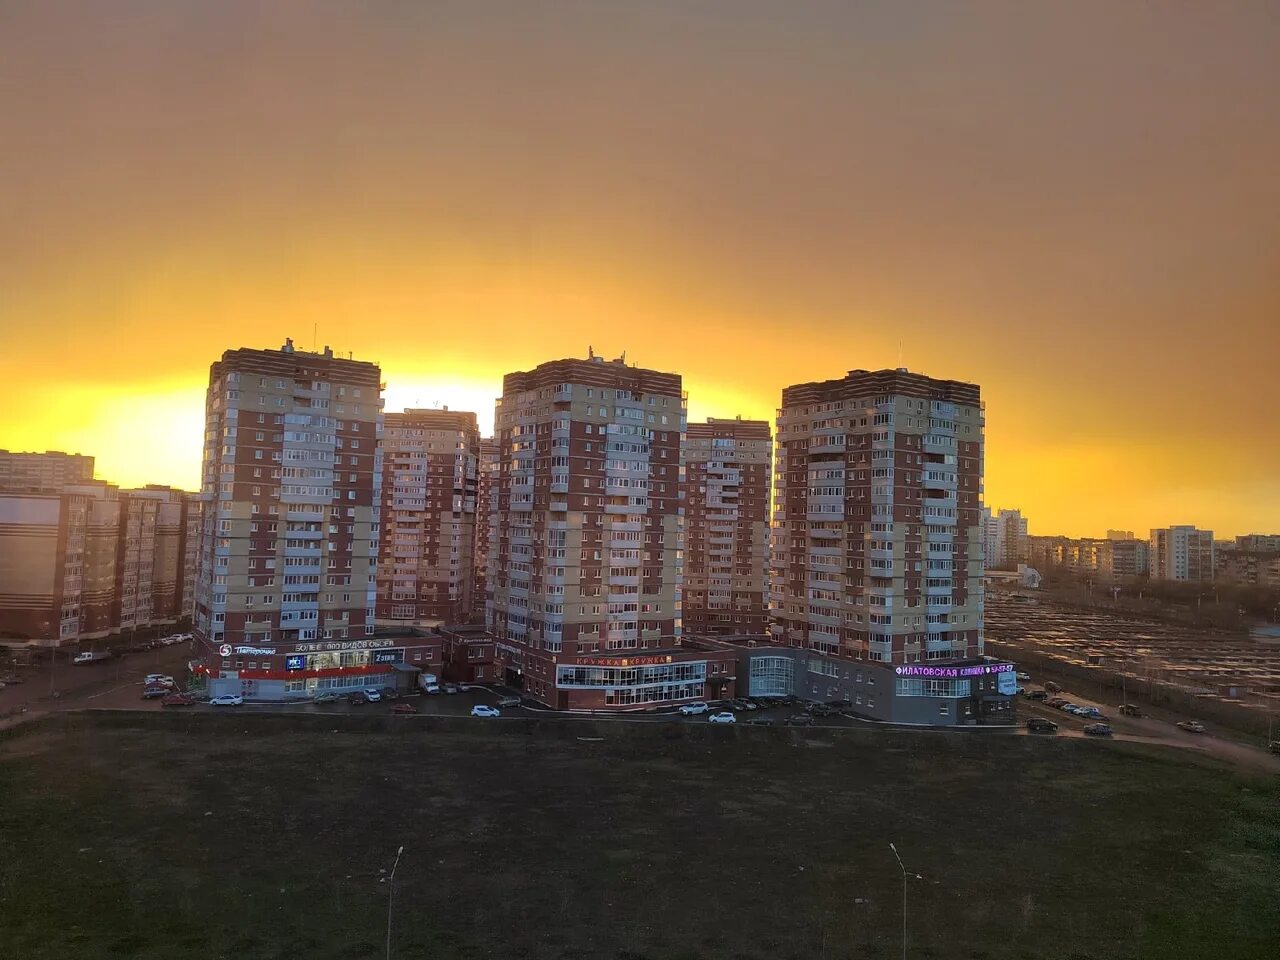 Инстаграмма тюмени. Вечерняя Тюмень. Закат в Тюмени. Вечерняя Тюмень фото. Фото город Тюмень 26 октября 2022.